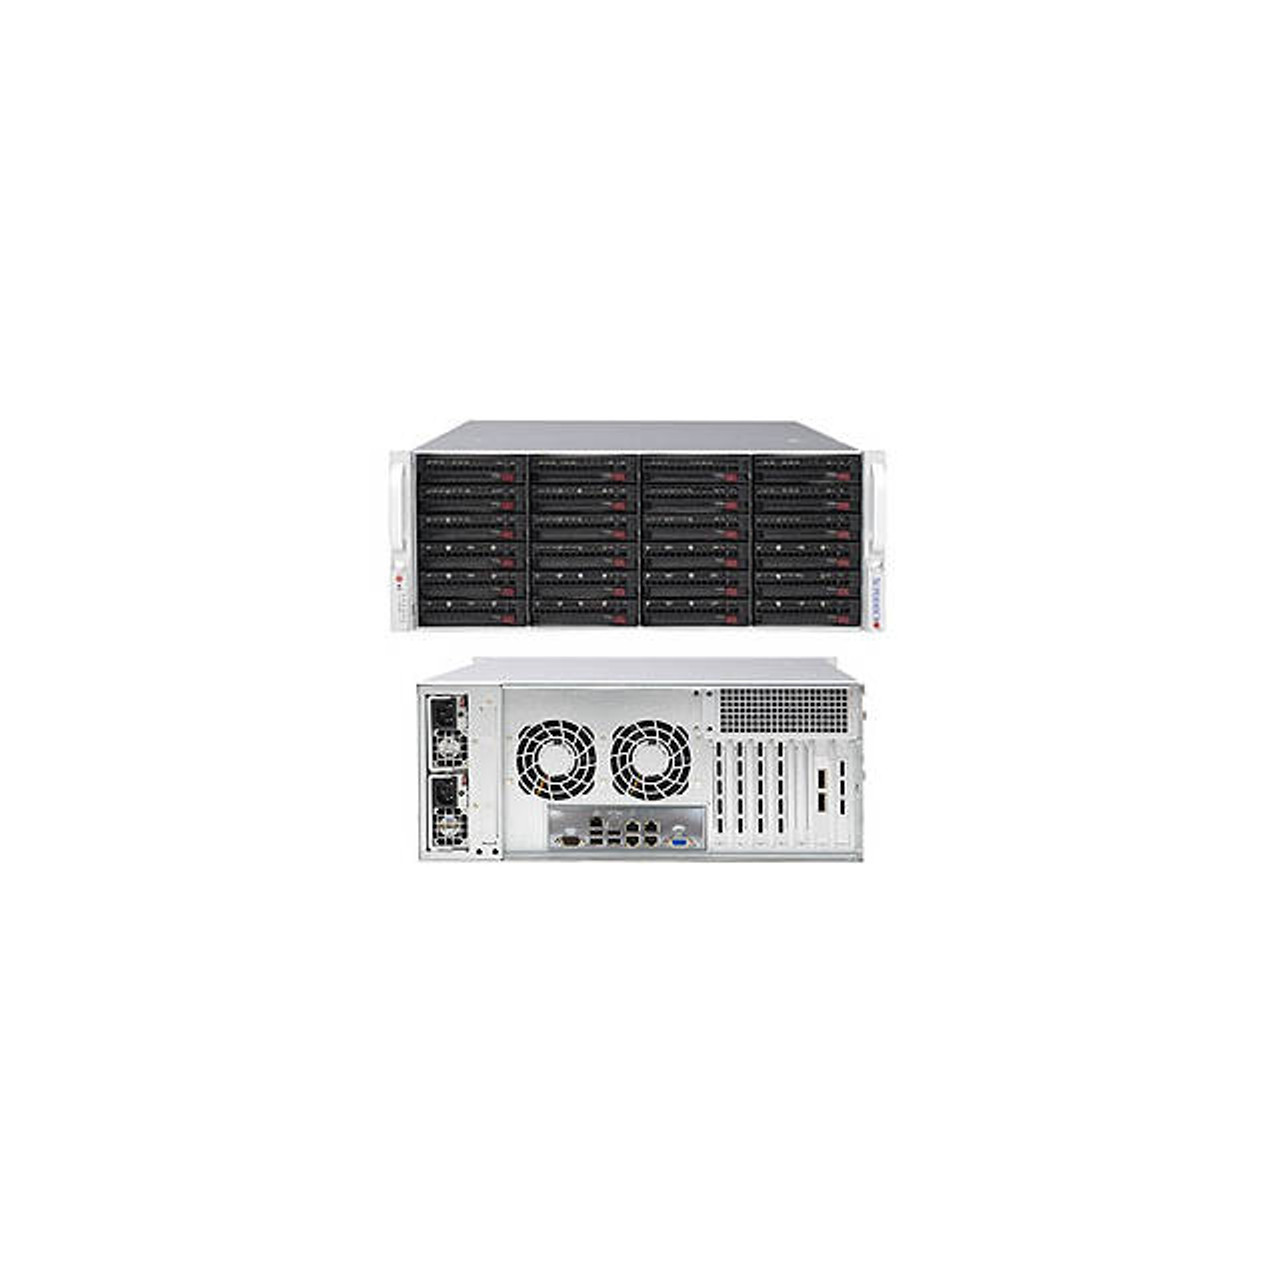 Supermicro SuperChassis CSE-846BE1C-R1K28B 1280W 4U Rackmount Server Chassis (Black)